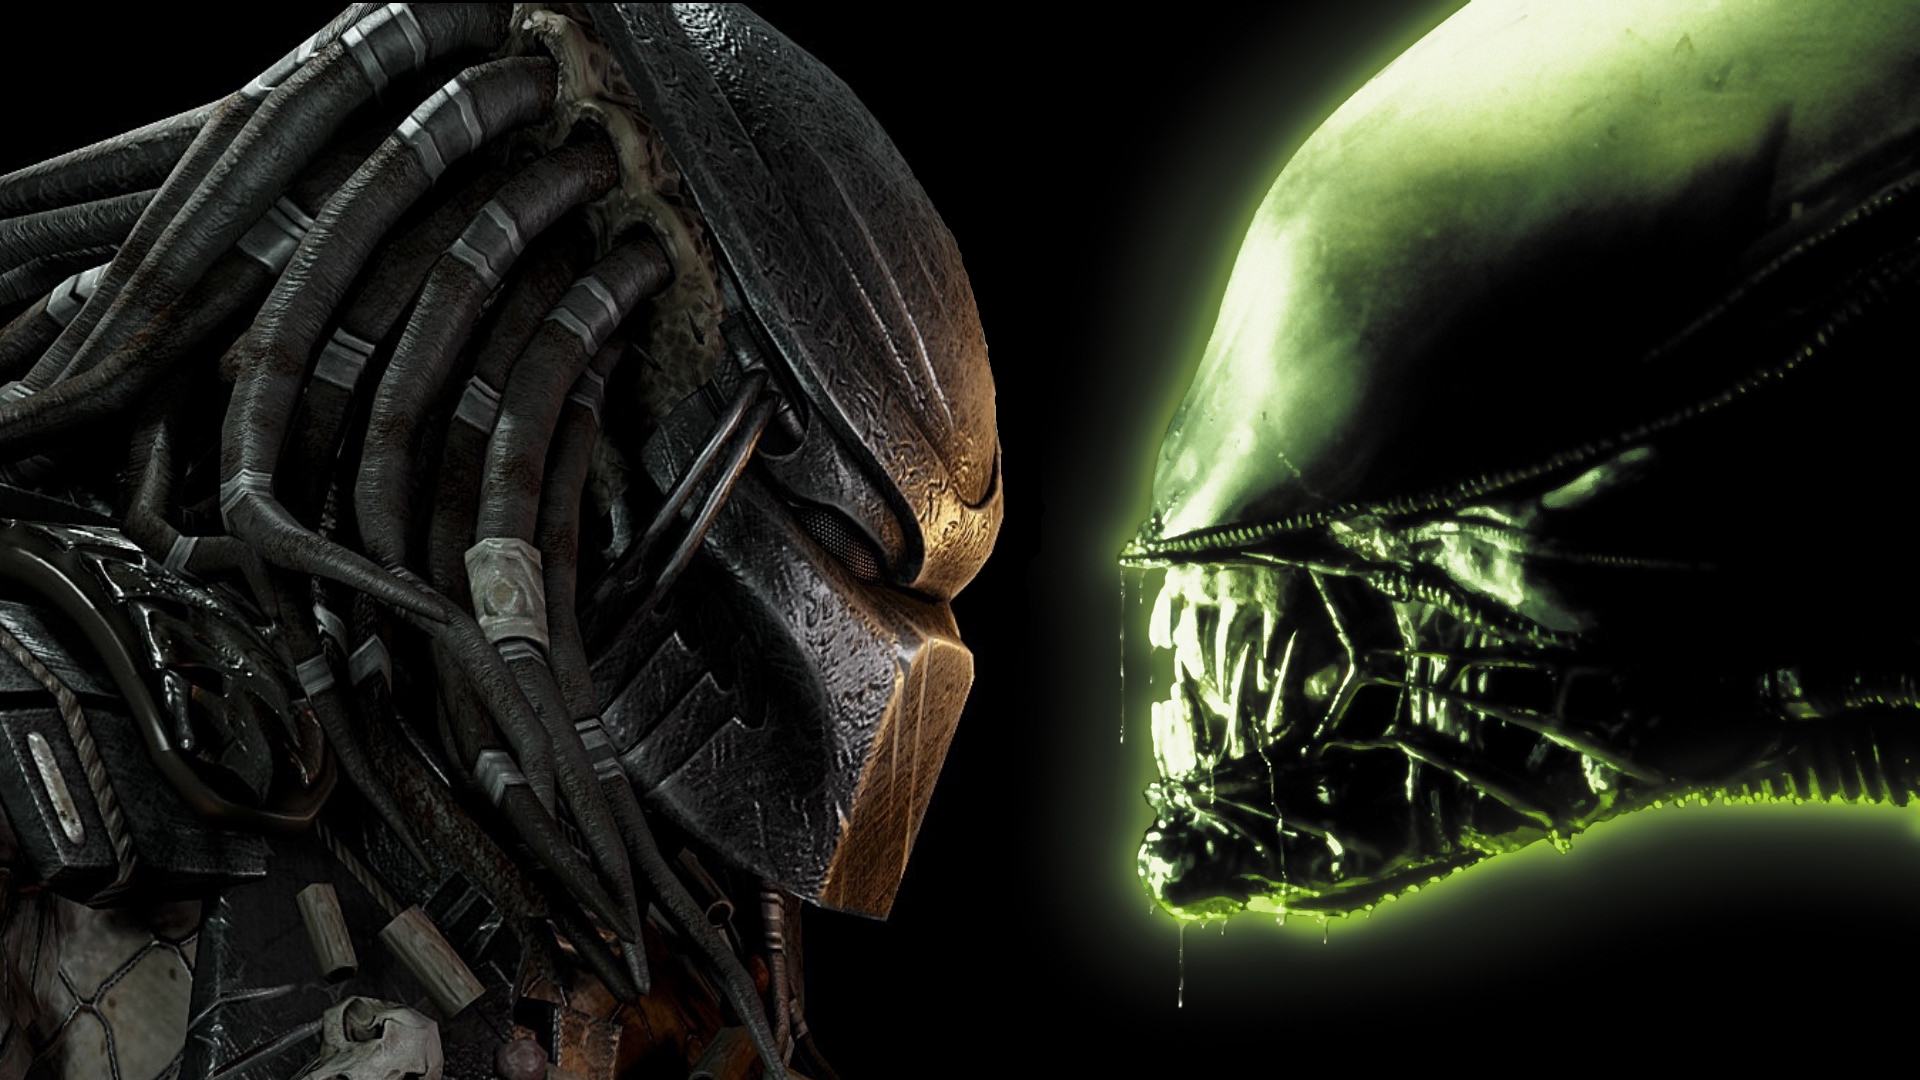 Movie AVP: Alien vs. Predator HD Wallpaper